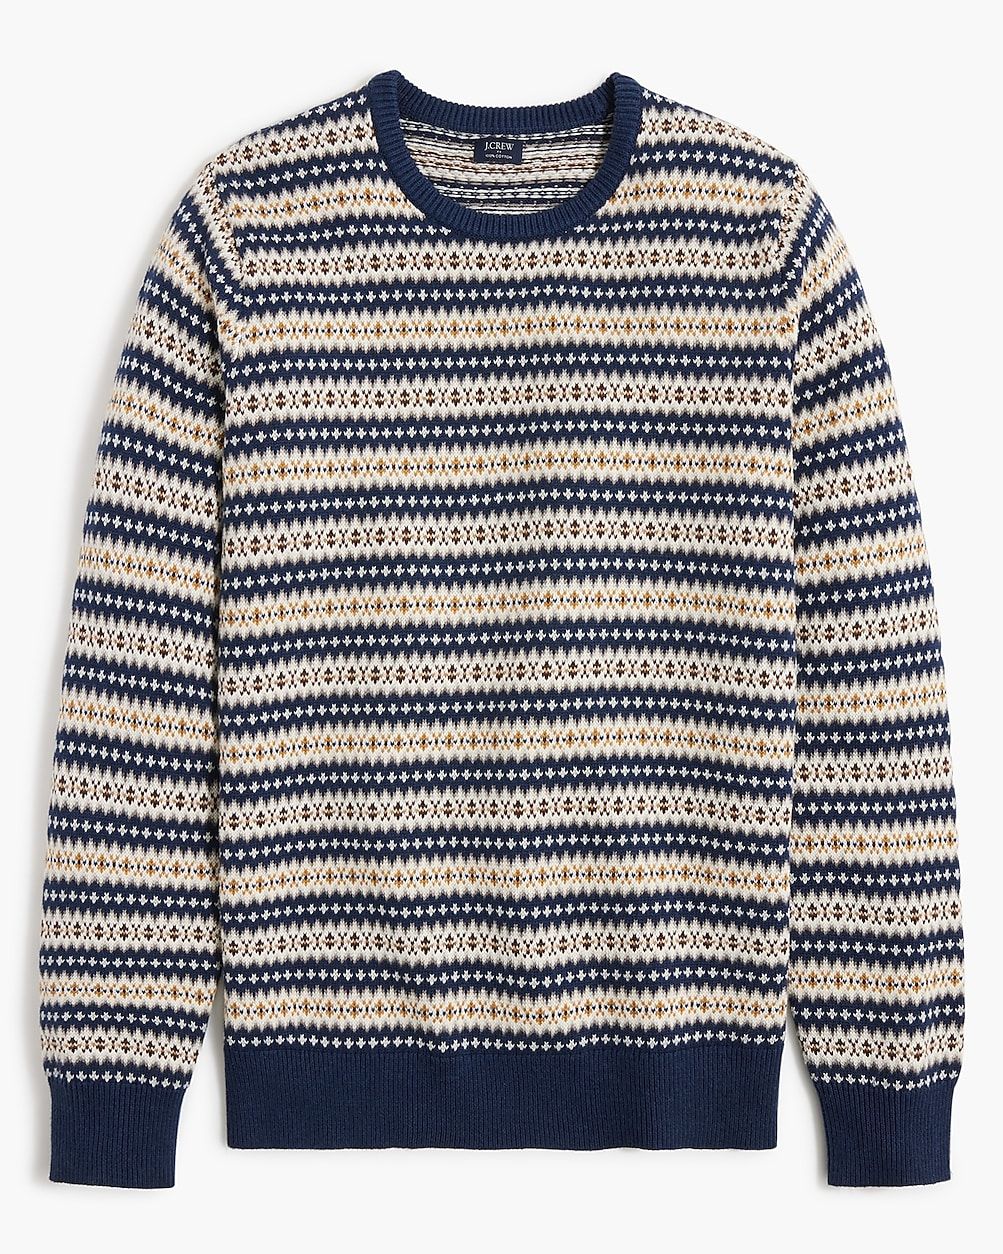 Cotton Fair Isle crewneck sweater | J.Crew Factory